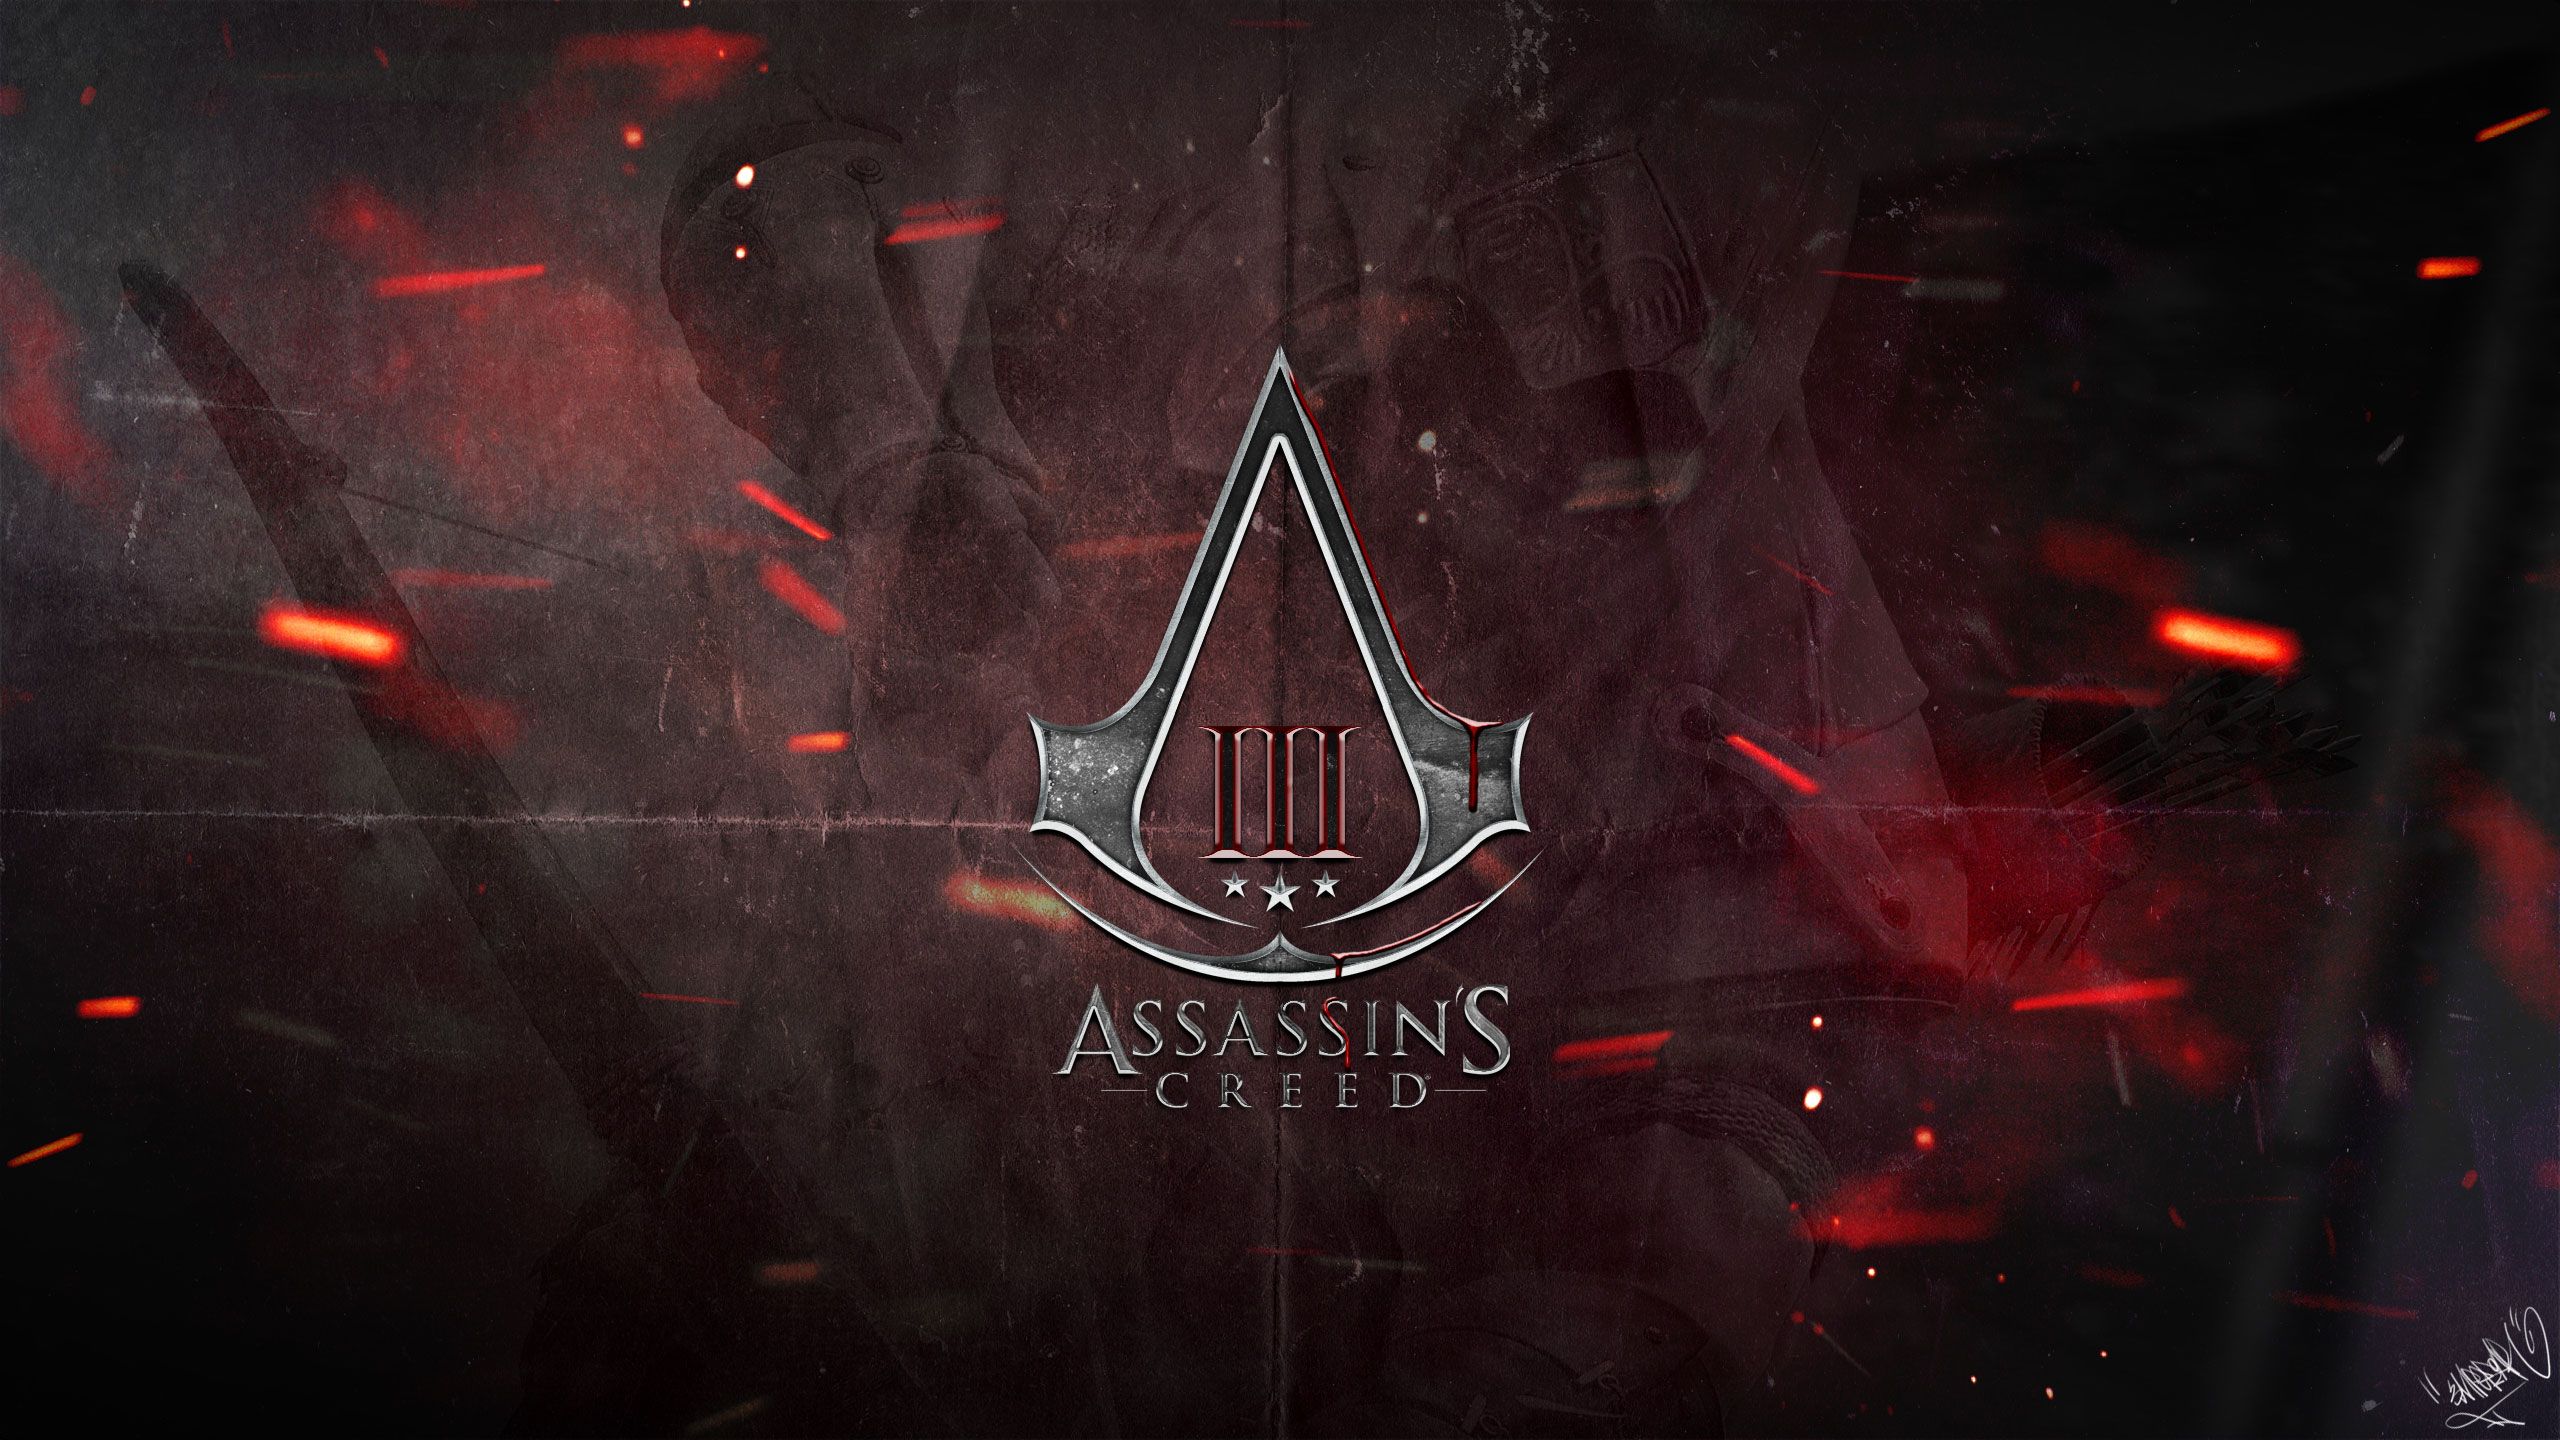 Assassin's Creed 3 - The Assassin's Wallpaper (32112849) - Fanpop